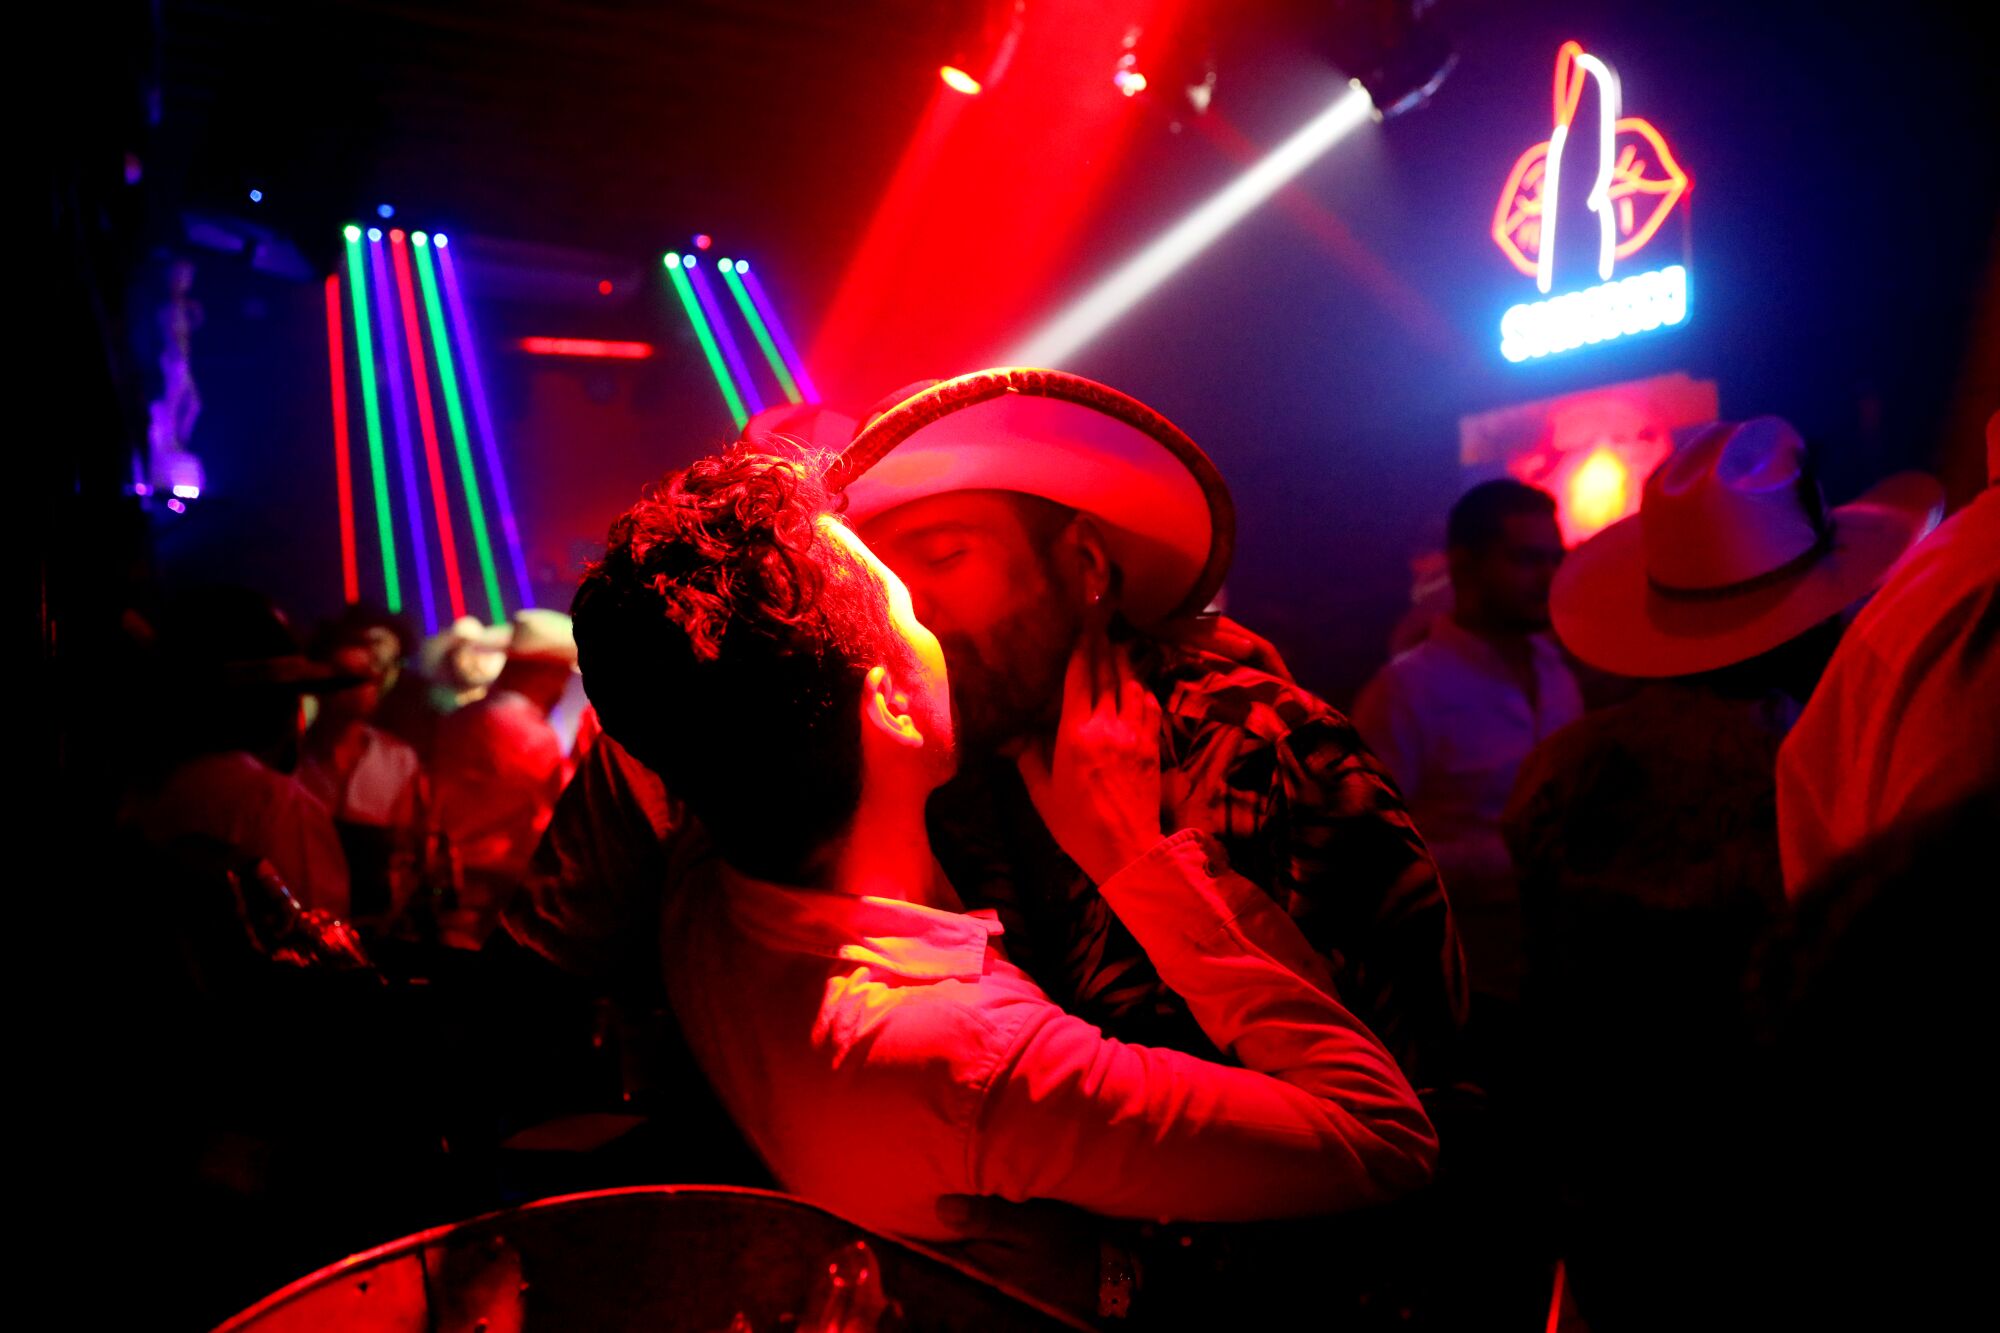 Men kiss under club lights.